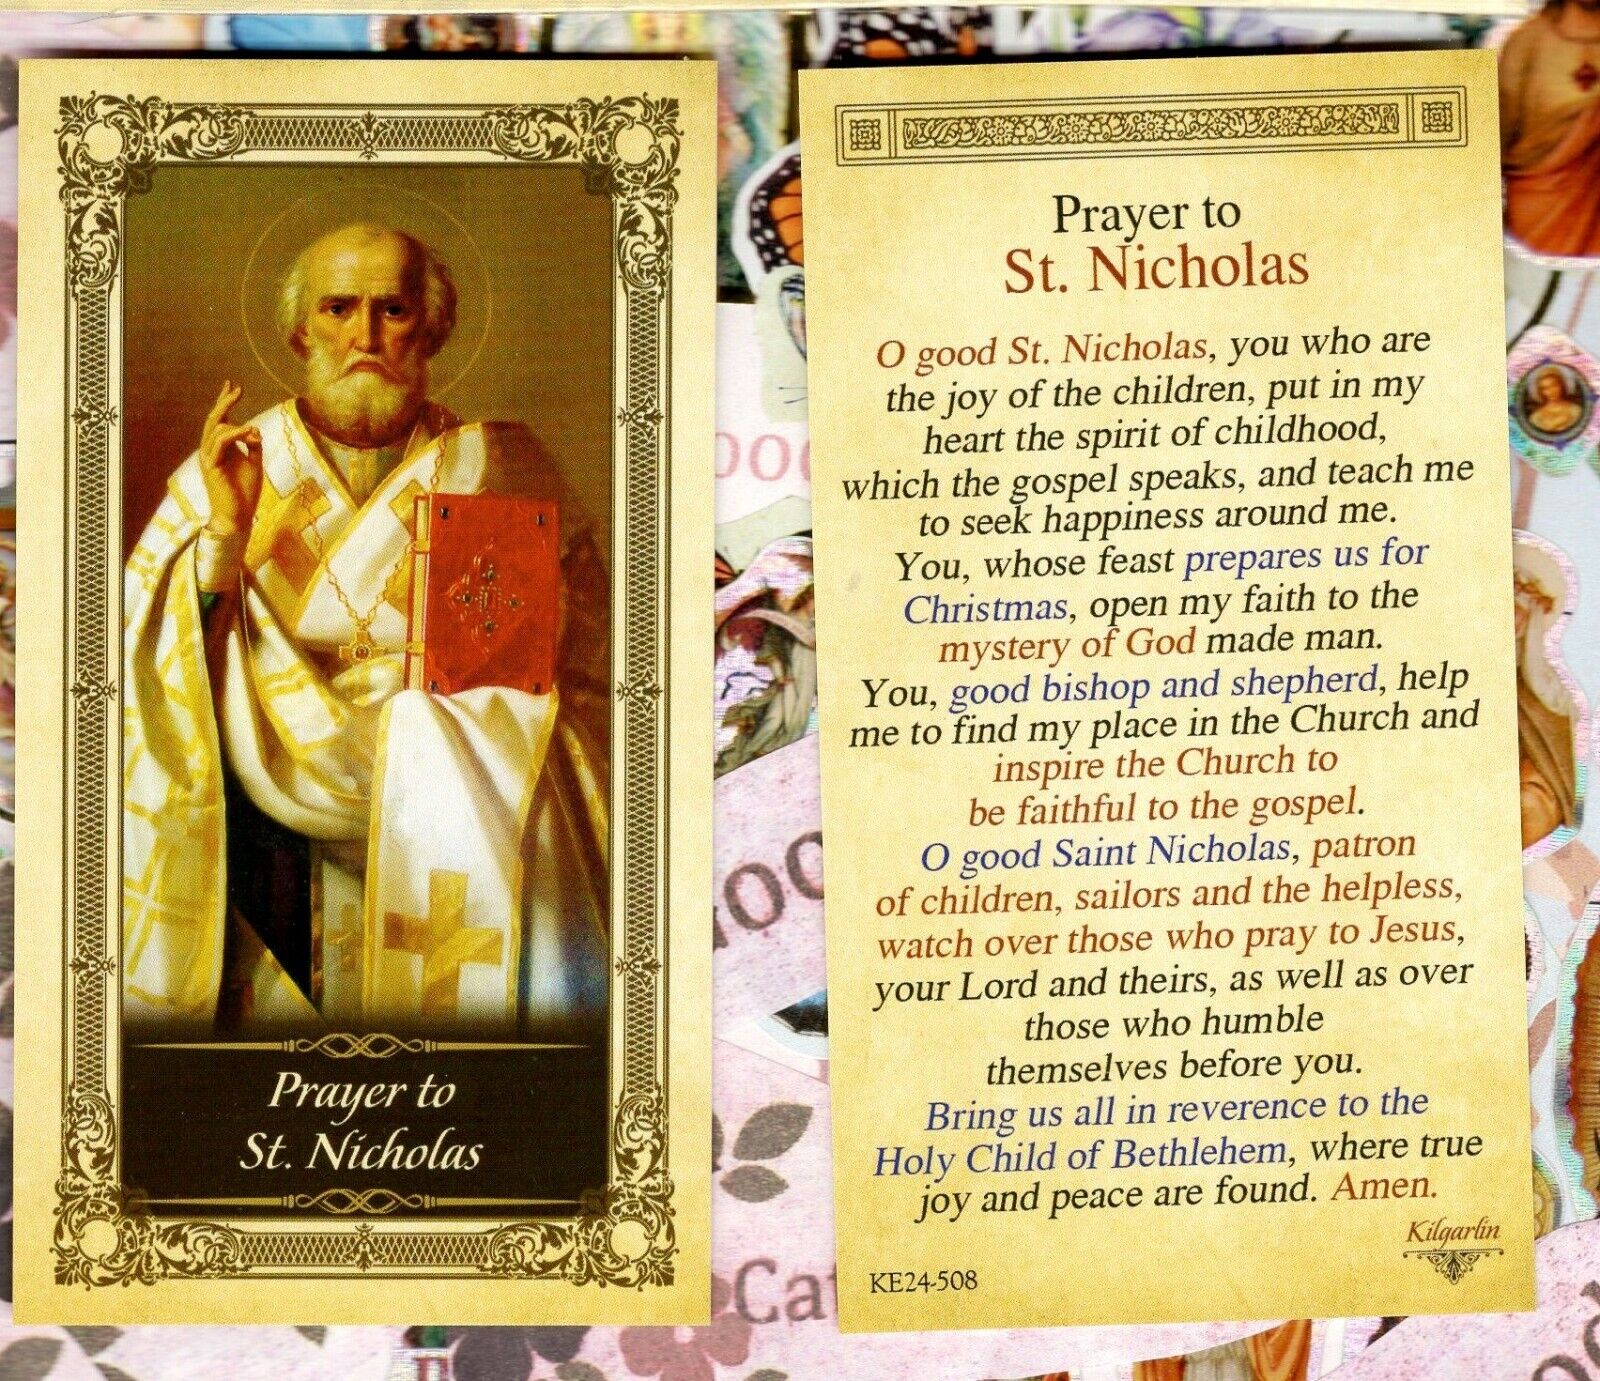 St. Nicholas with Prayer to Saint Nicholas - Glossy Paperstock Holy Card